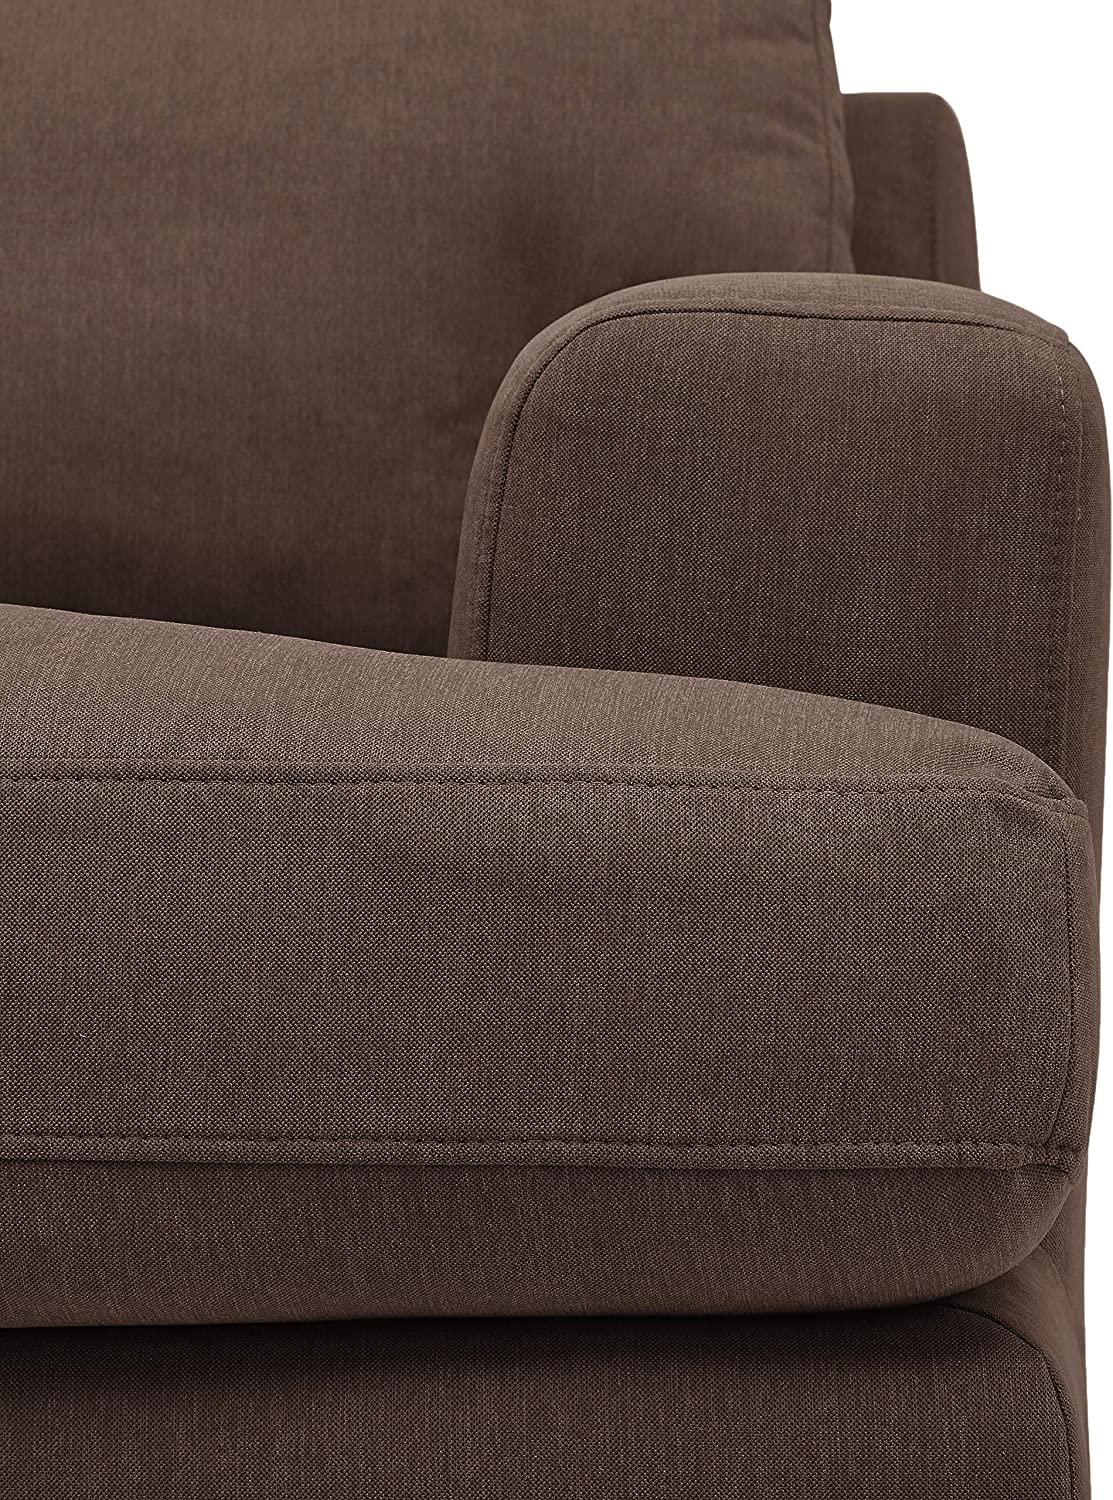 Stone & Beam Lauren Down-Filled Oversized Armchair, 46"W, Chocolate - $450